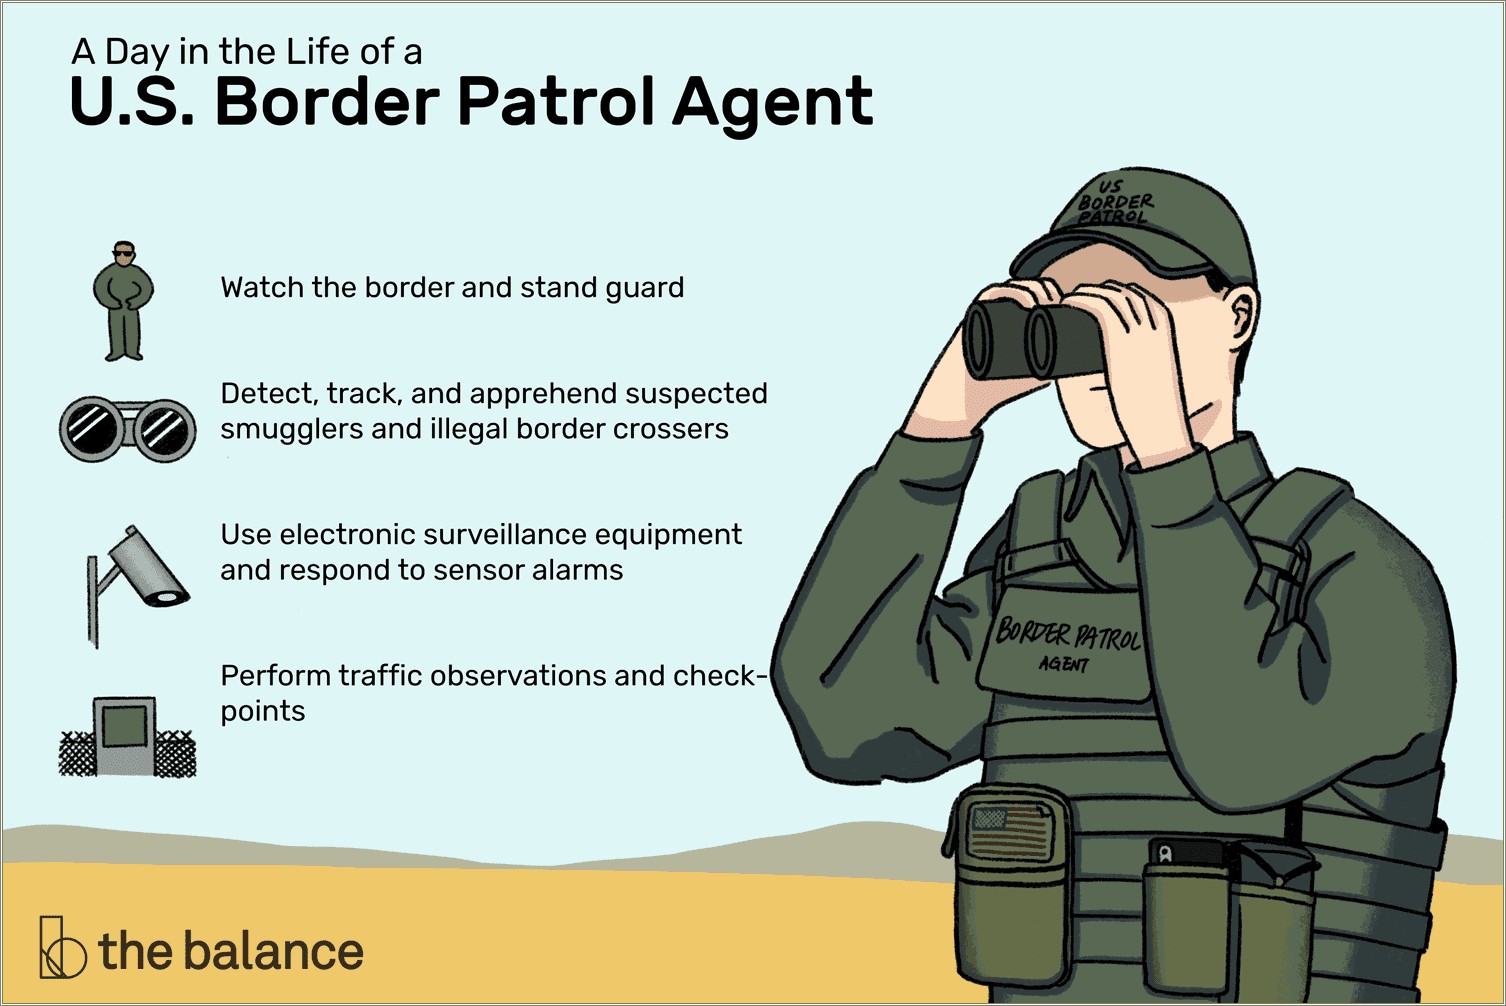 Resume Objective For Border Patrol Agent